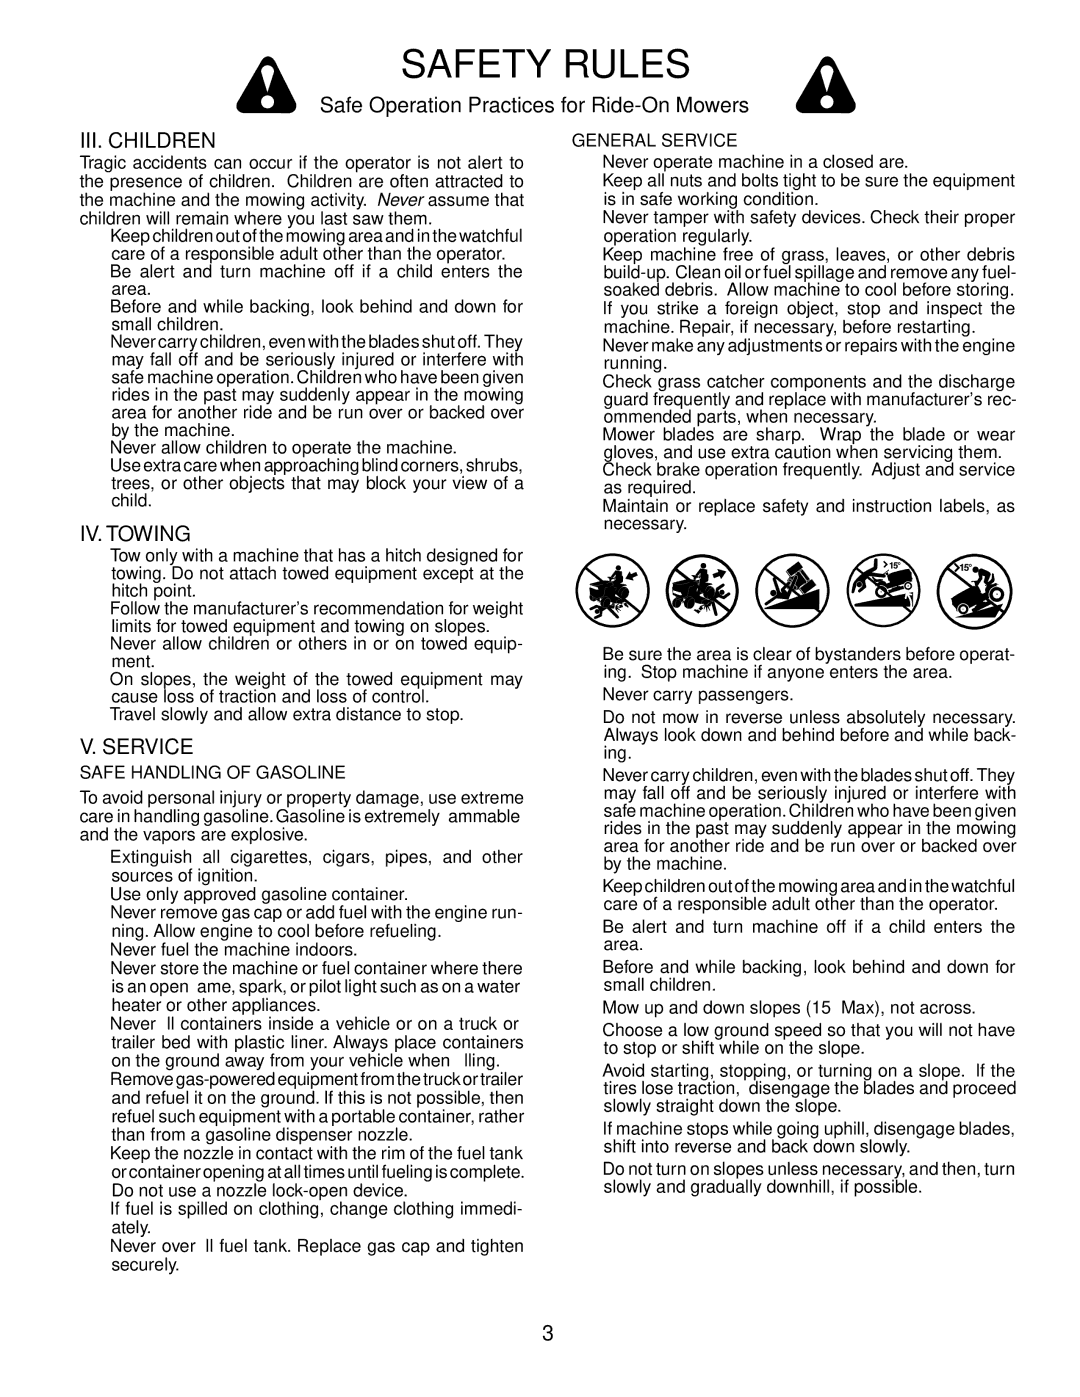 Husqvarna YTH2448 manual III. Children, IV. Towing, General Service, Safe Handling of Gasoline 